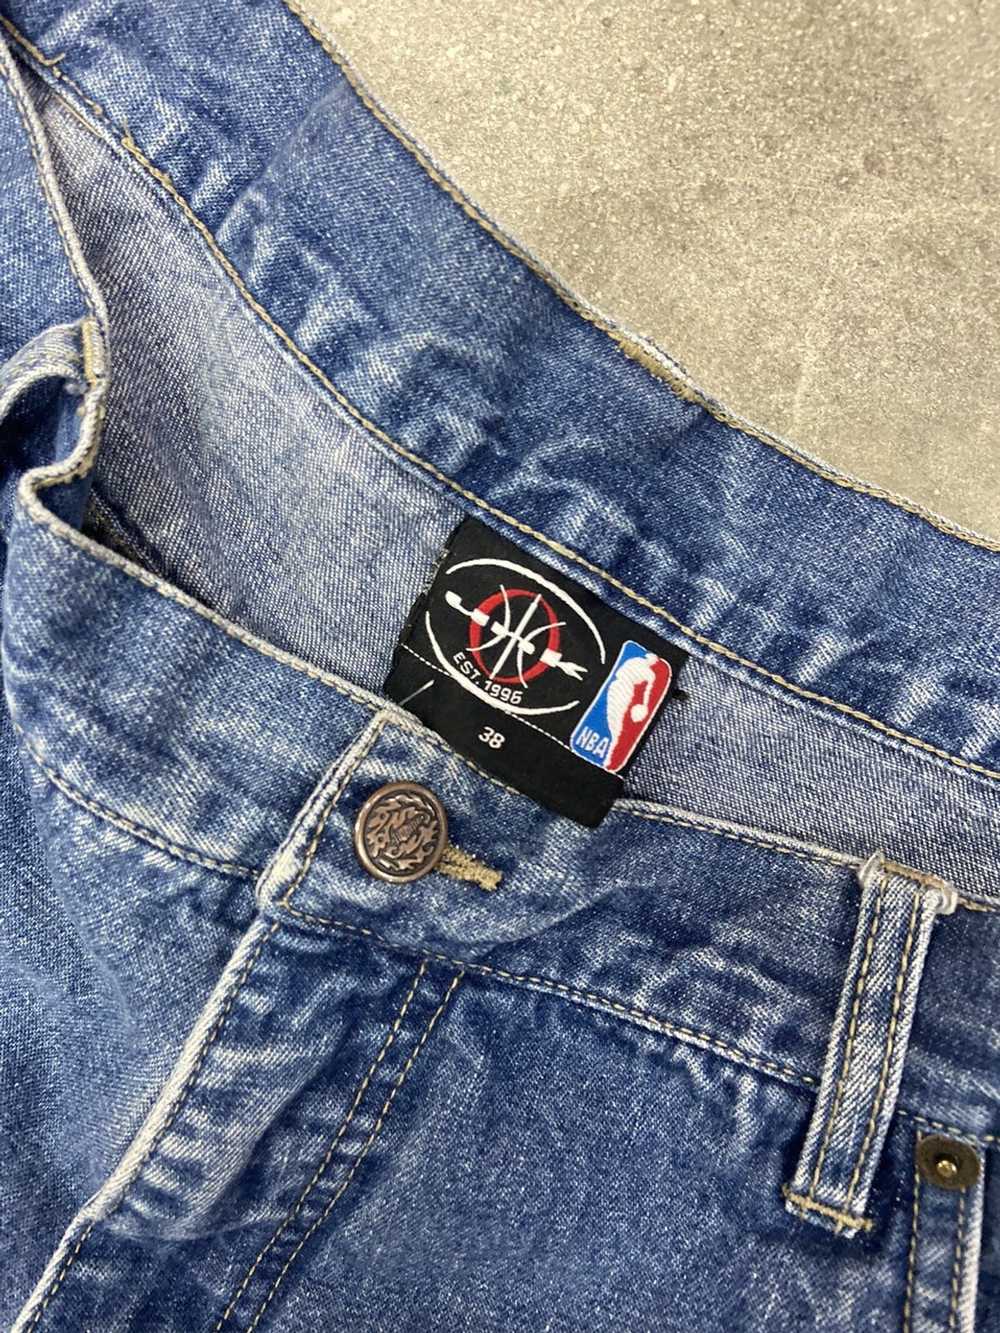 NBA New York Knicks Jeans UNK Vintage Basketball Pants 90s 